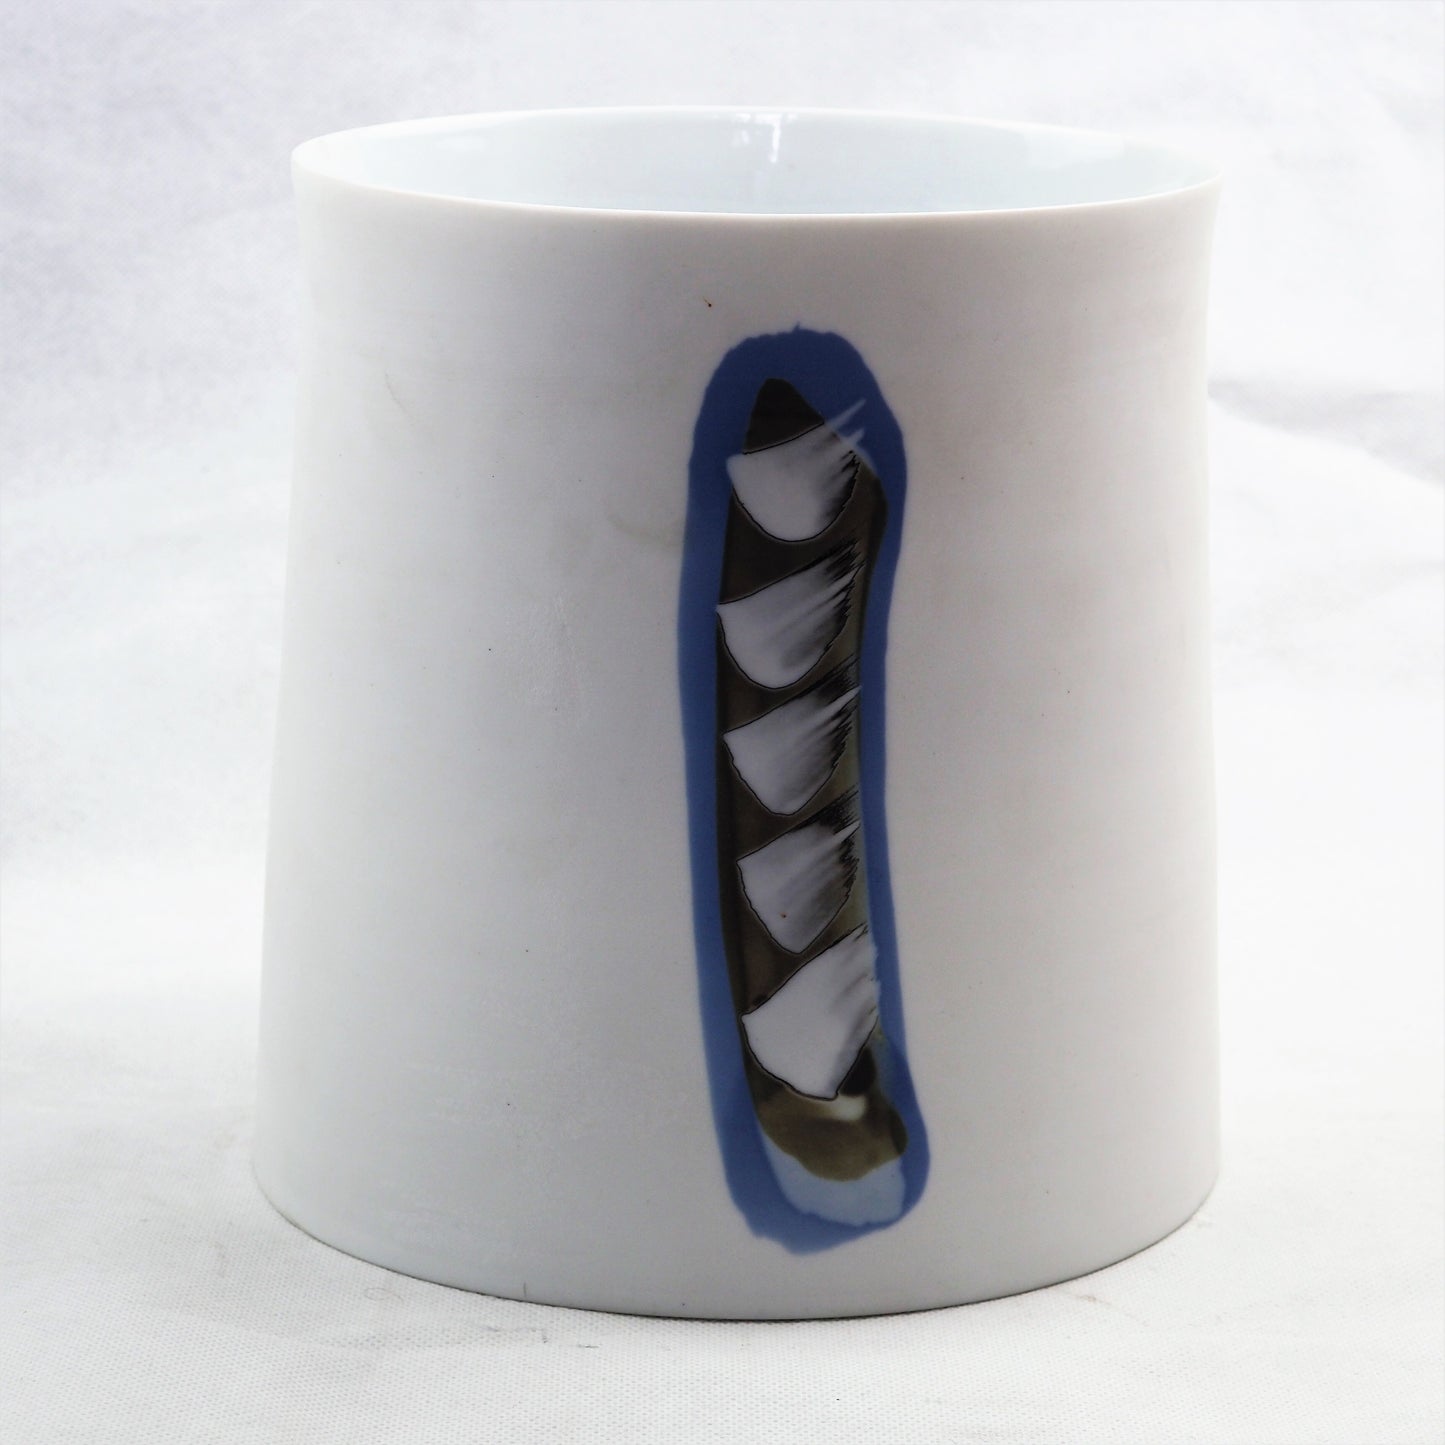 Les Blakebrough – Porcelain Conical Vessel | Les Blakebrough | Primavera Gallery